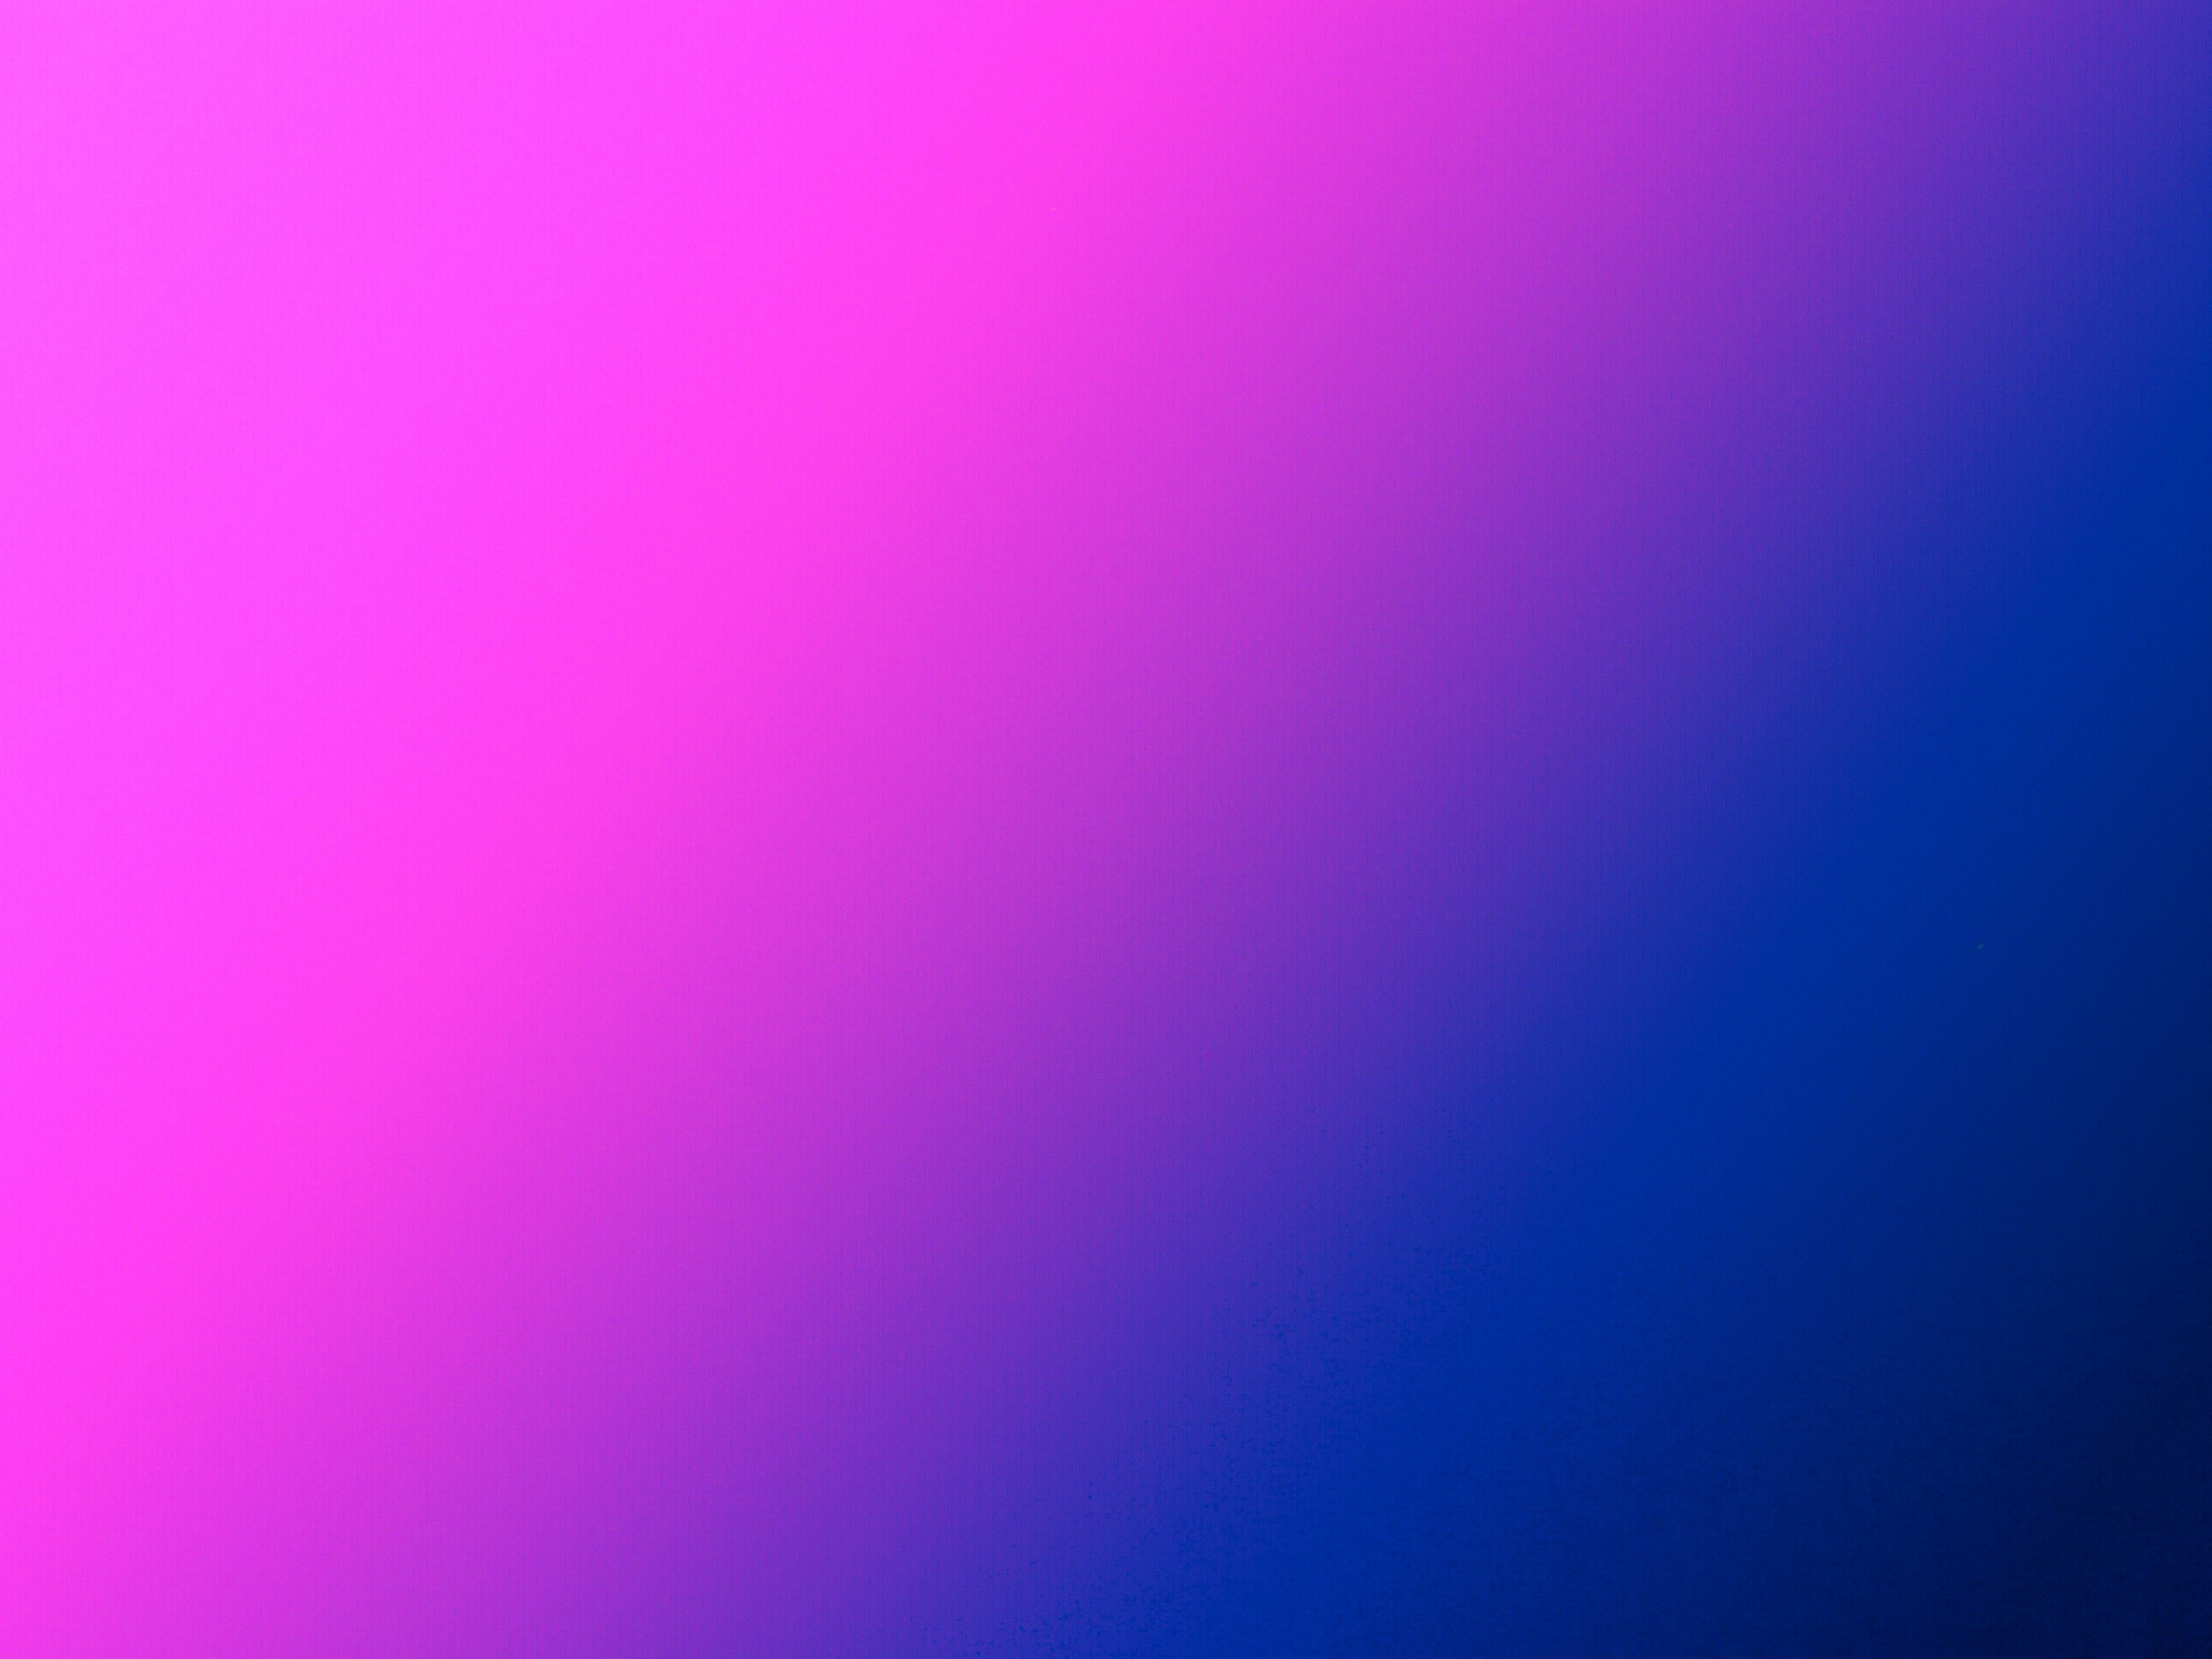 Background pink half blue